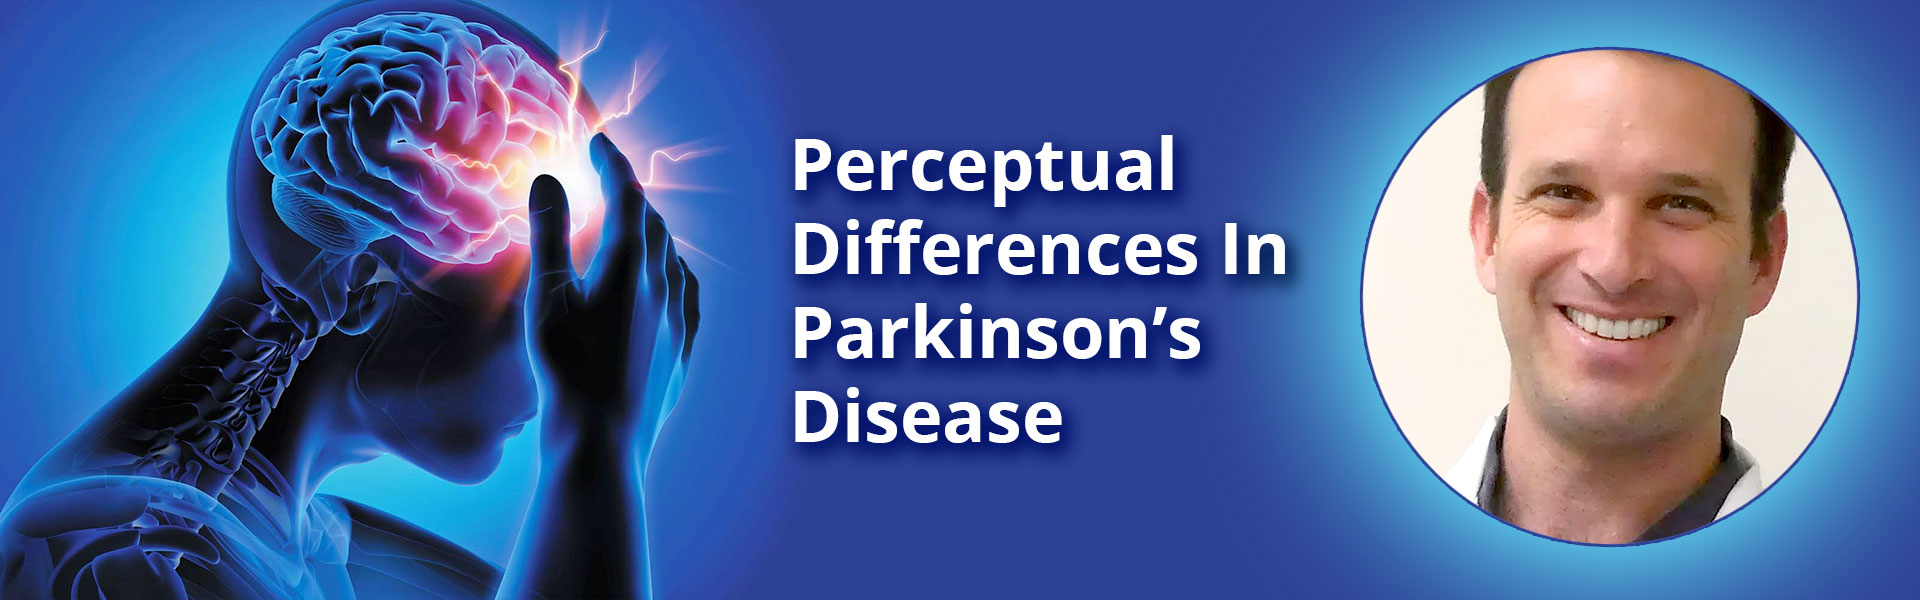 Perceptual Differences In Parkinson’s Disease